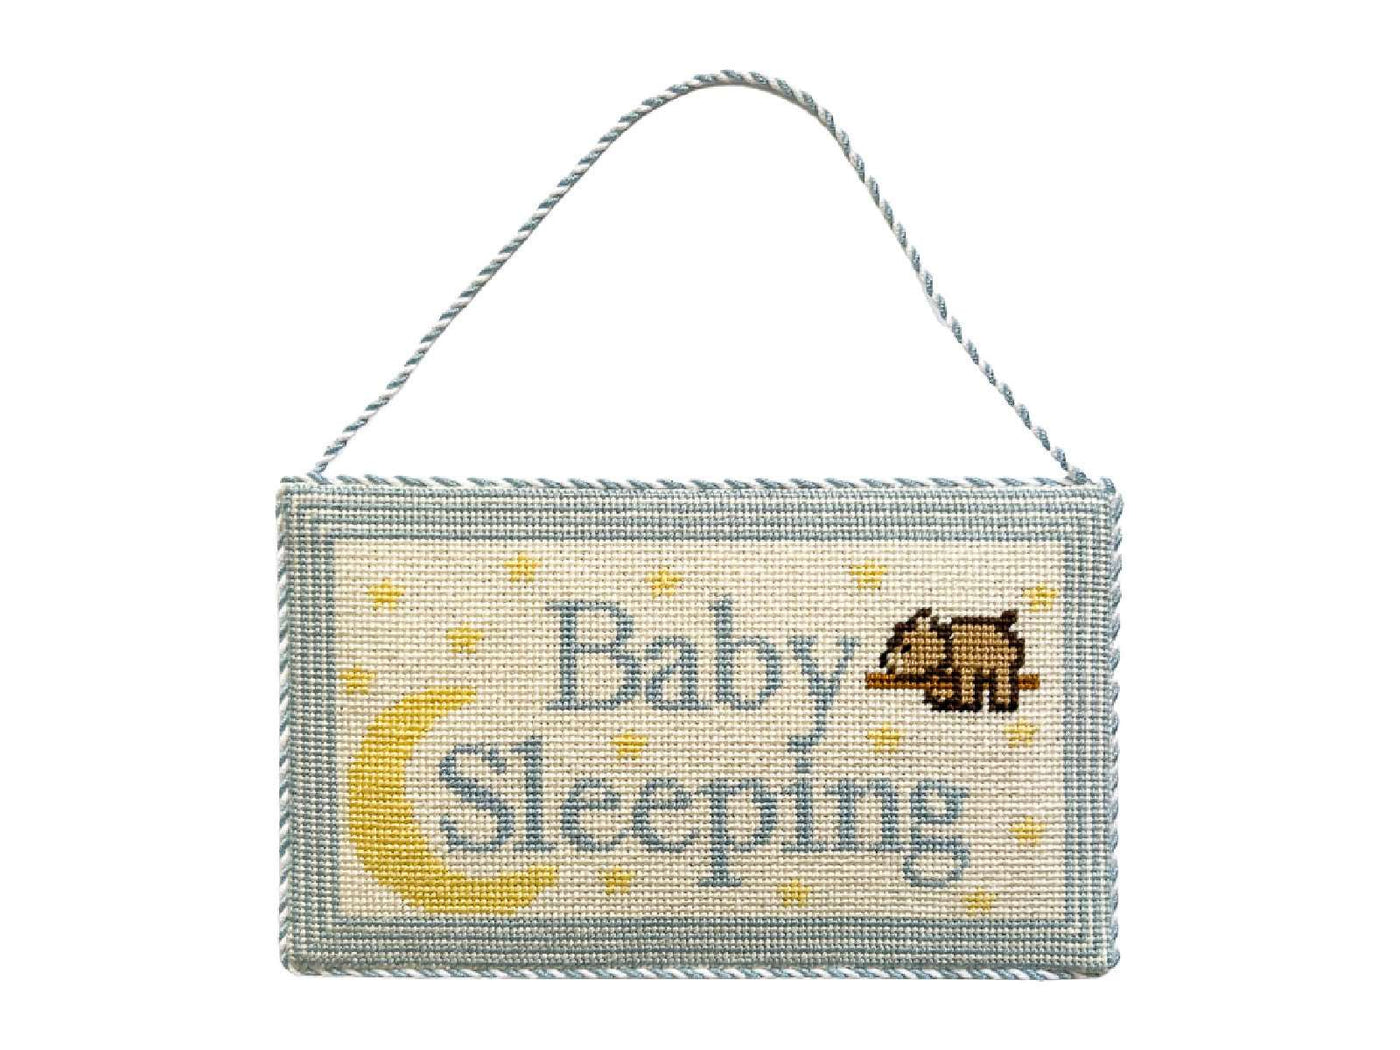 Baby Sleeping Bear - Penny Linn Designs - Penny Linn Designs